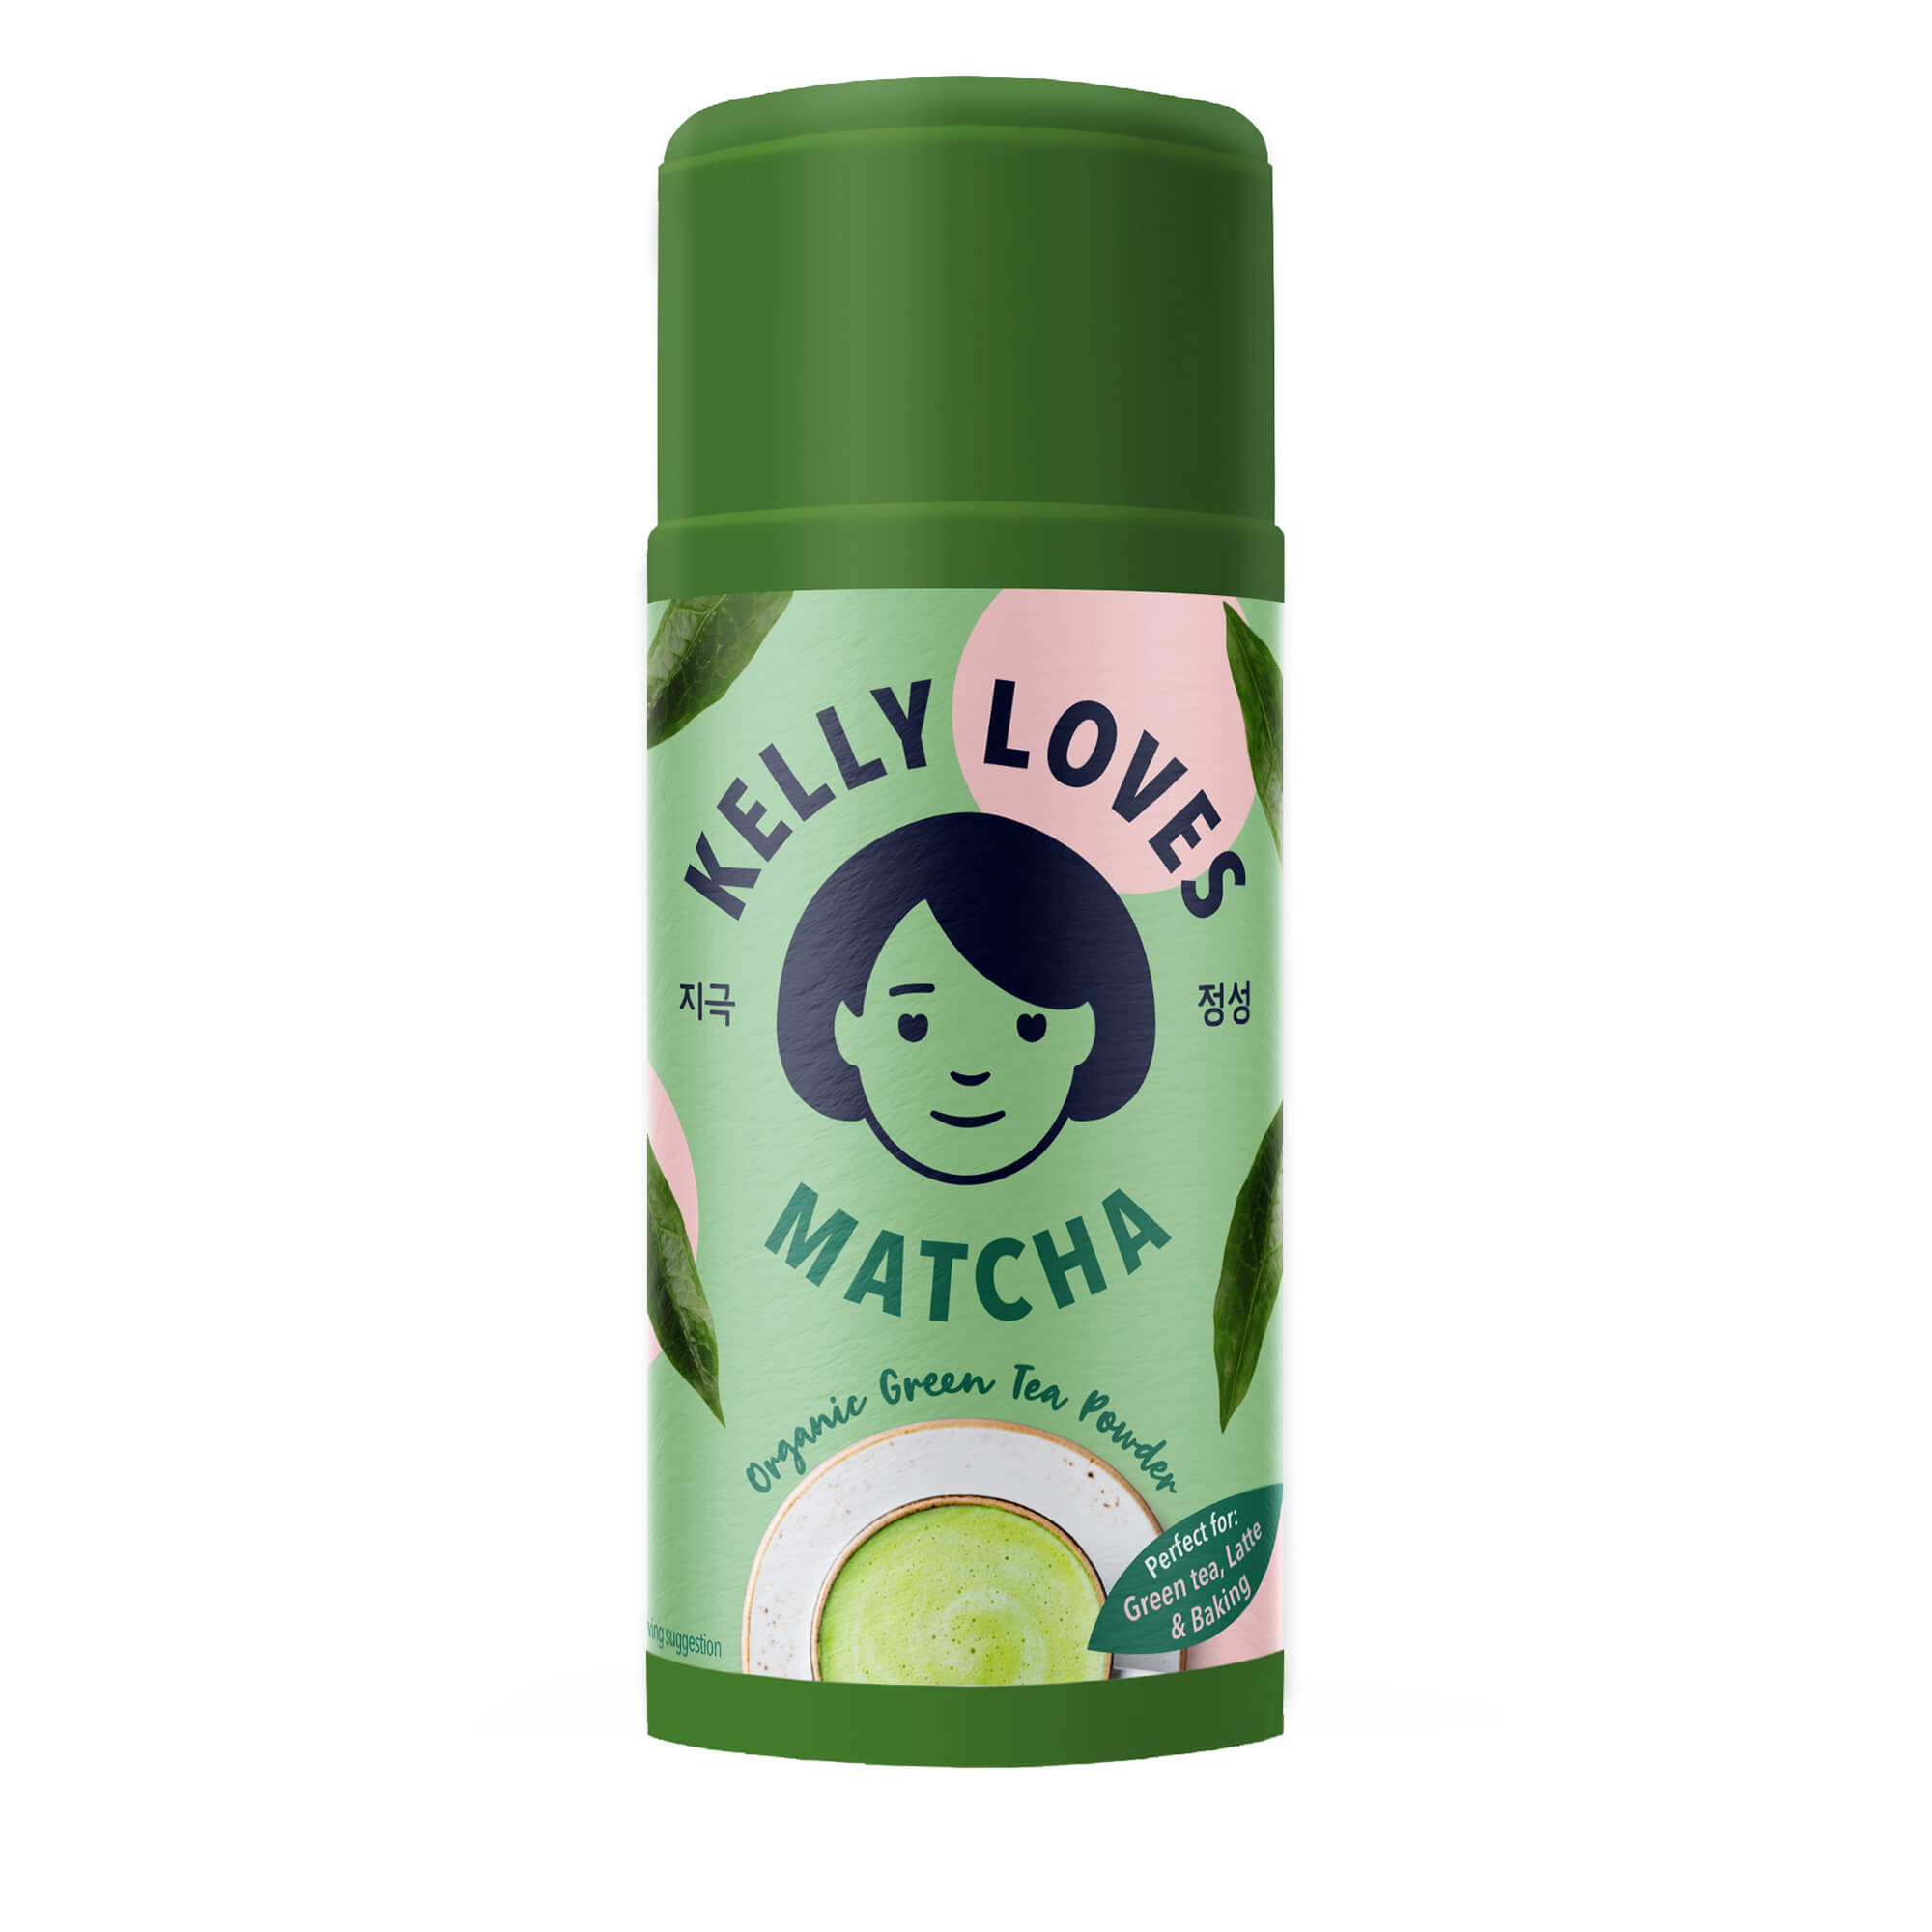 Kelly Loves Matcha Green Tea Powder 50g